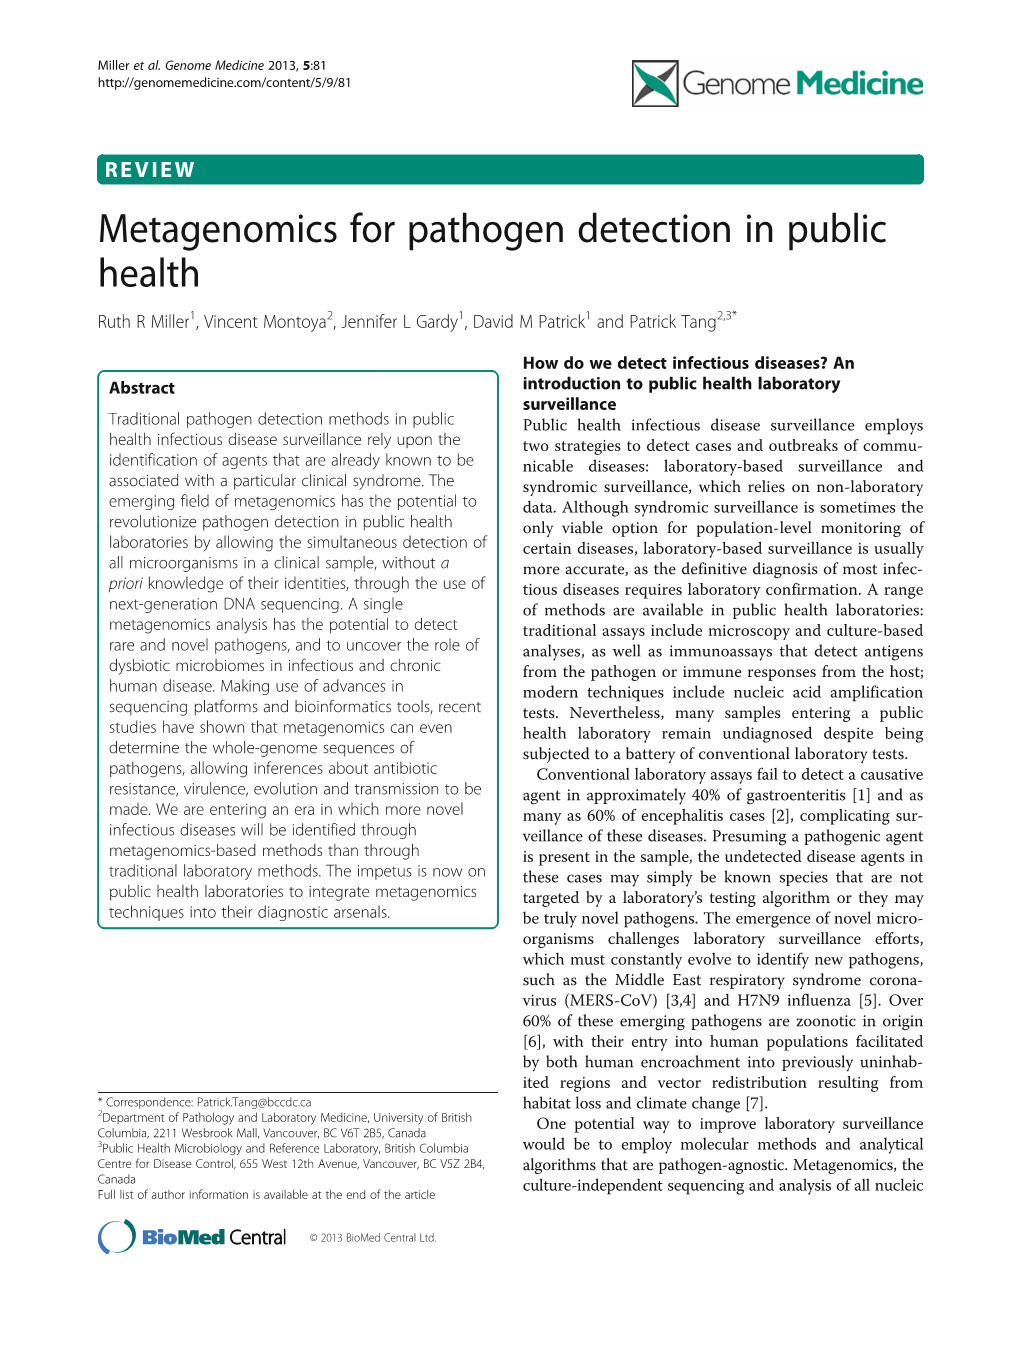 Metagenomics for Pathogen Detection in Public Health Ruth R Miller1, Vincent Montoya2, Jennifer L Gardy1, David M Patrick1 and Patrick Tang2,3*